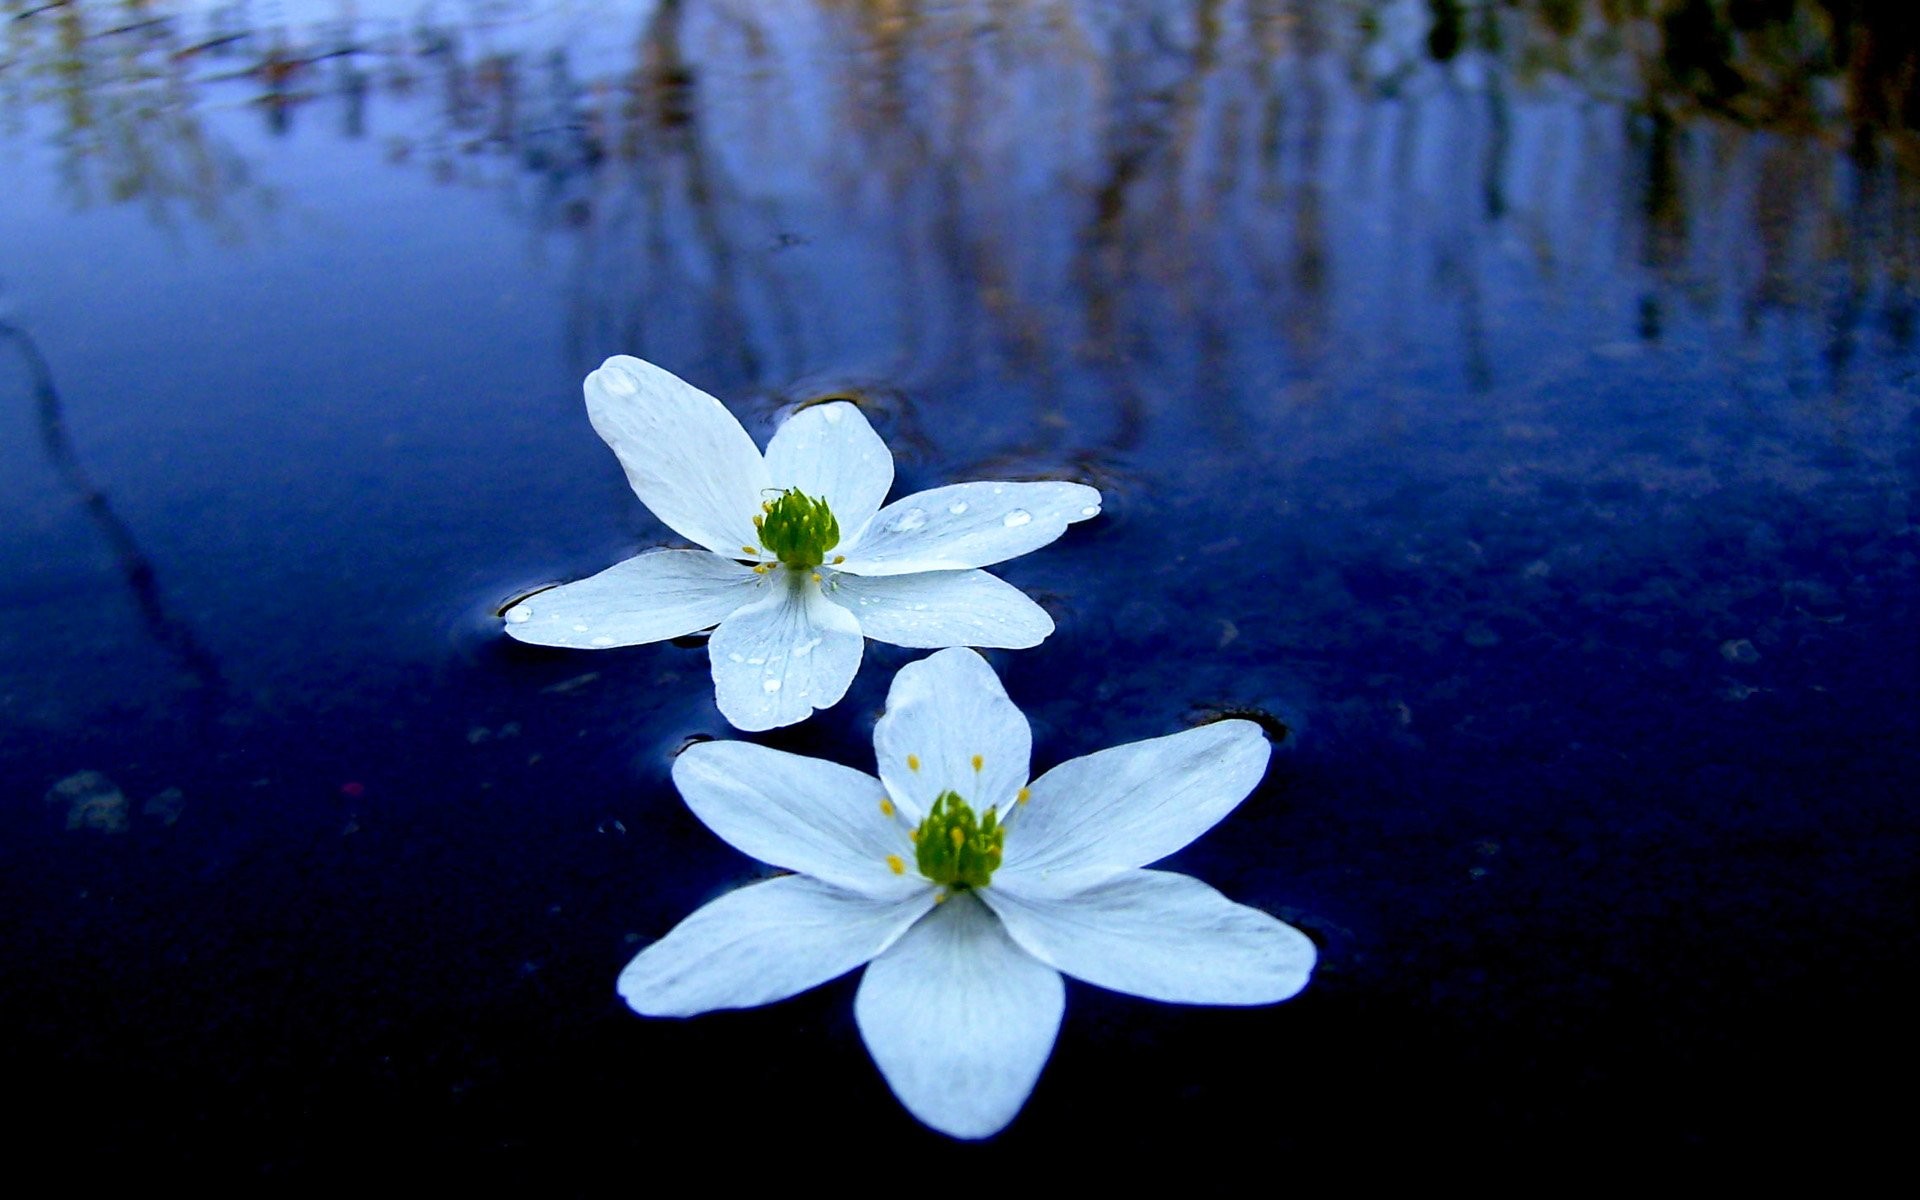 Flowers: Lotus White Petal Water Flower Wallpaper New for HD 16:9 ...